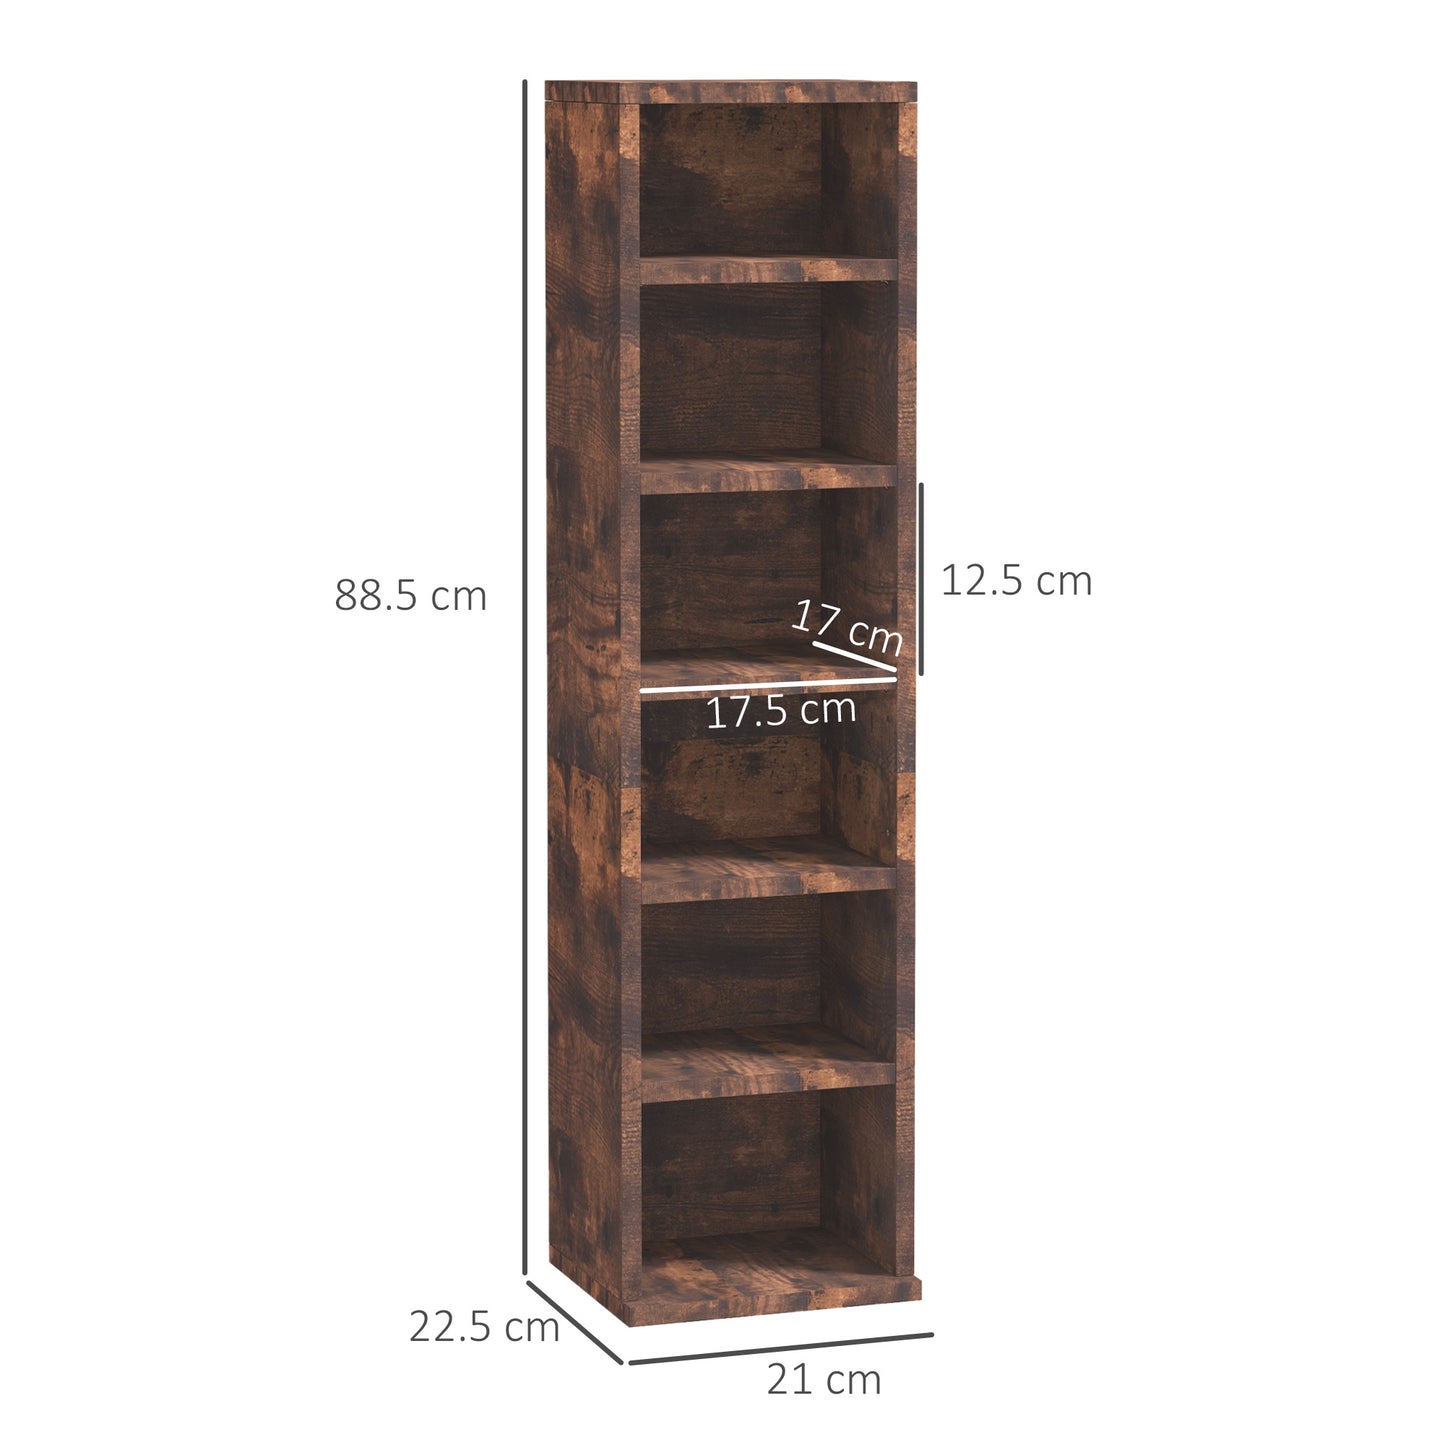 HOMCOM CD Media Display Shelf Unit Tower Rack with Adjustable Shelves, Set of 2